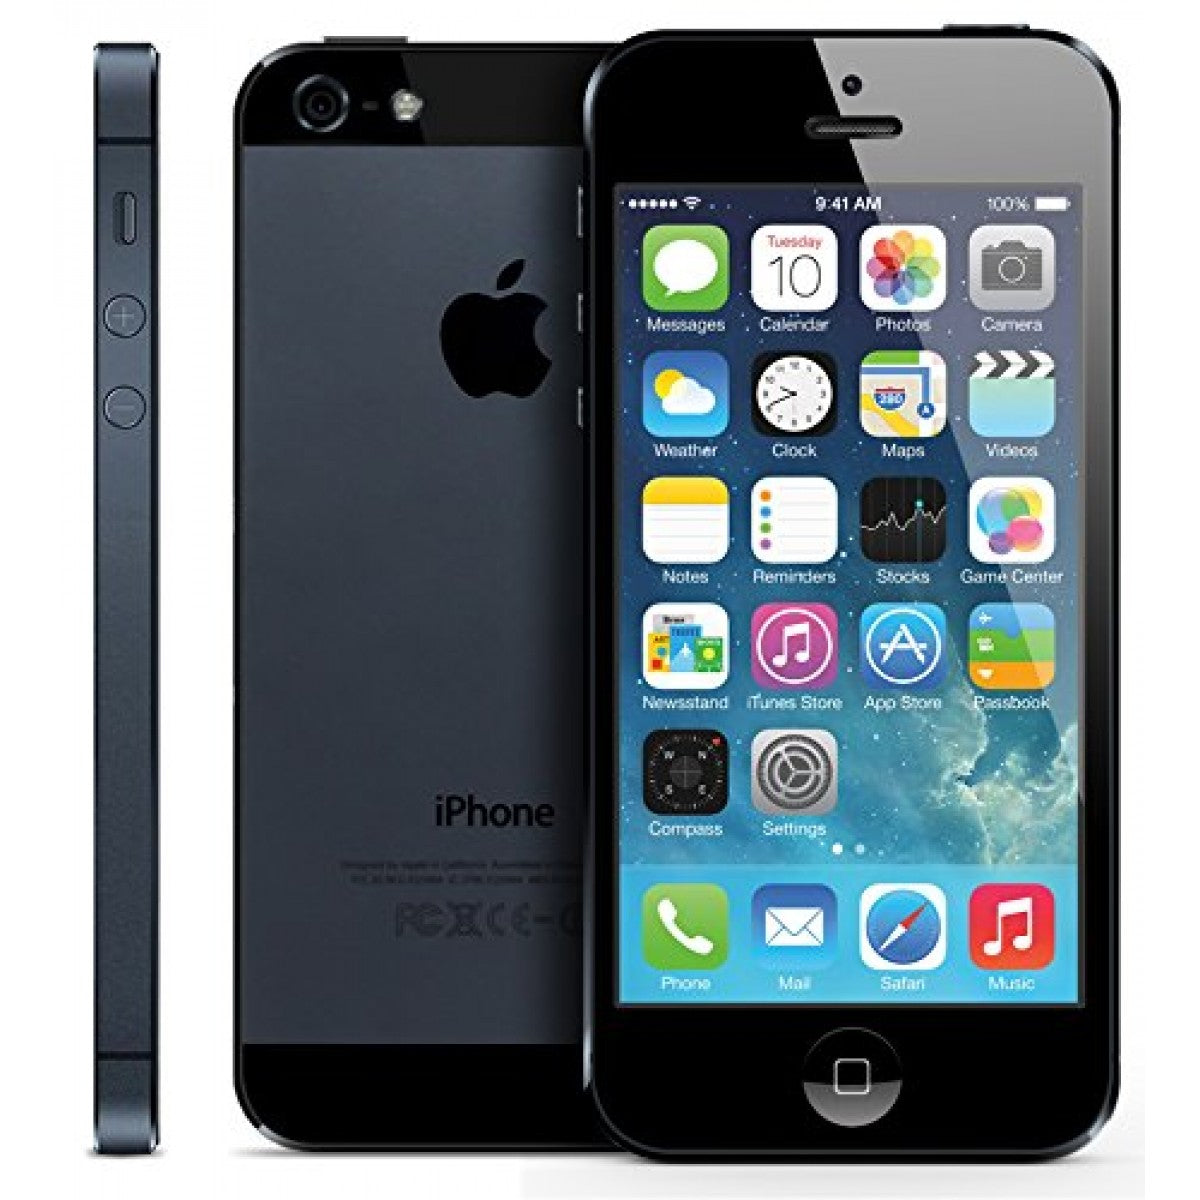 iPhone 5 – Cellular Savings